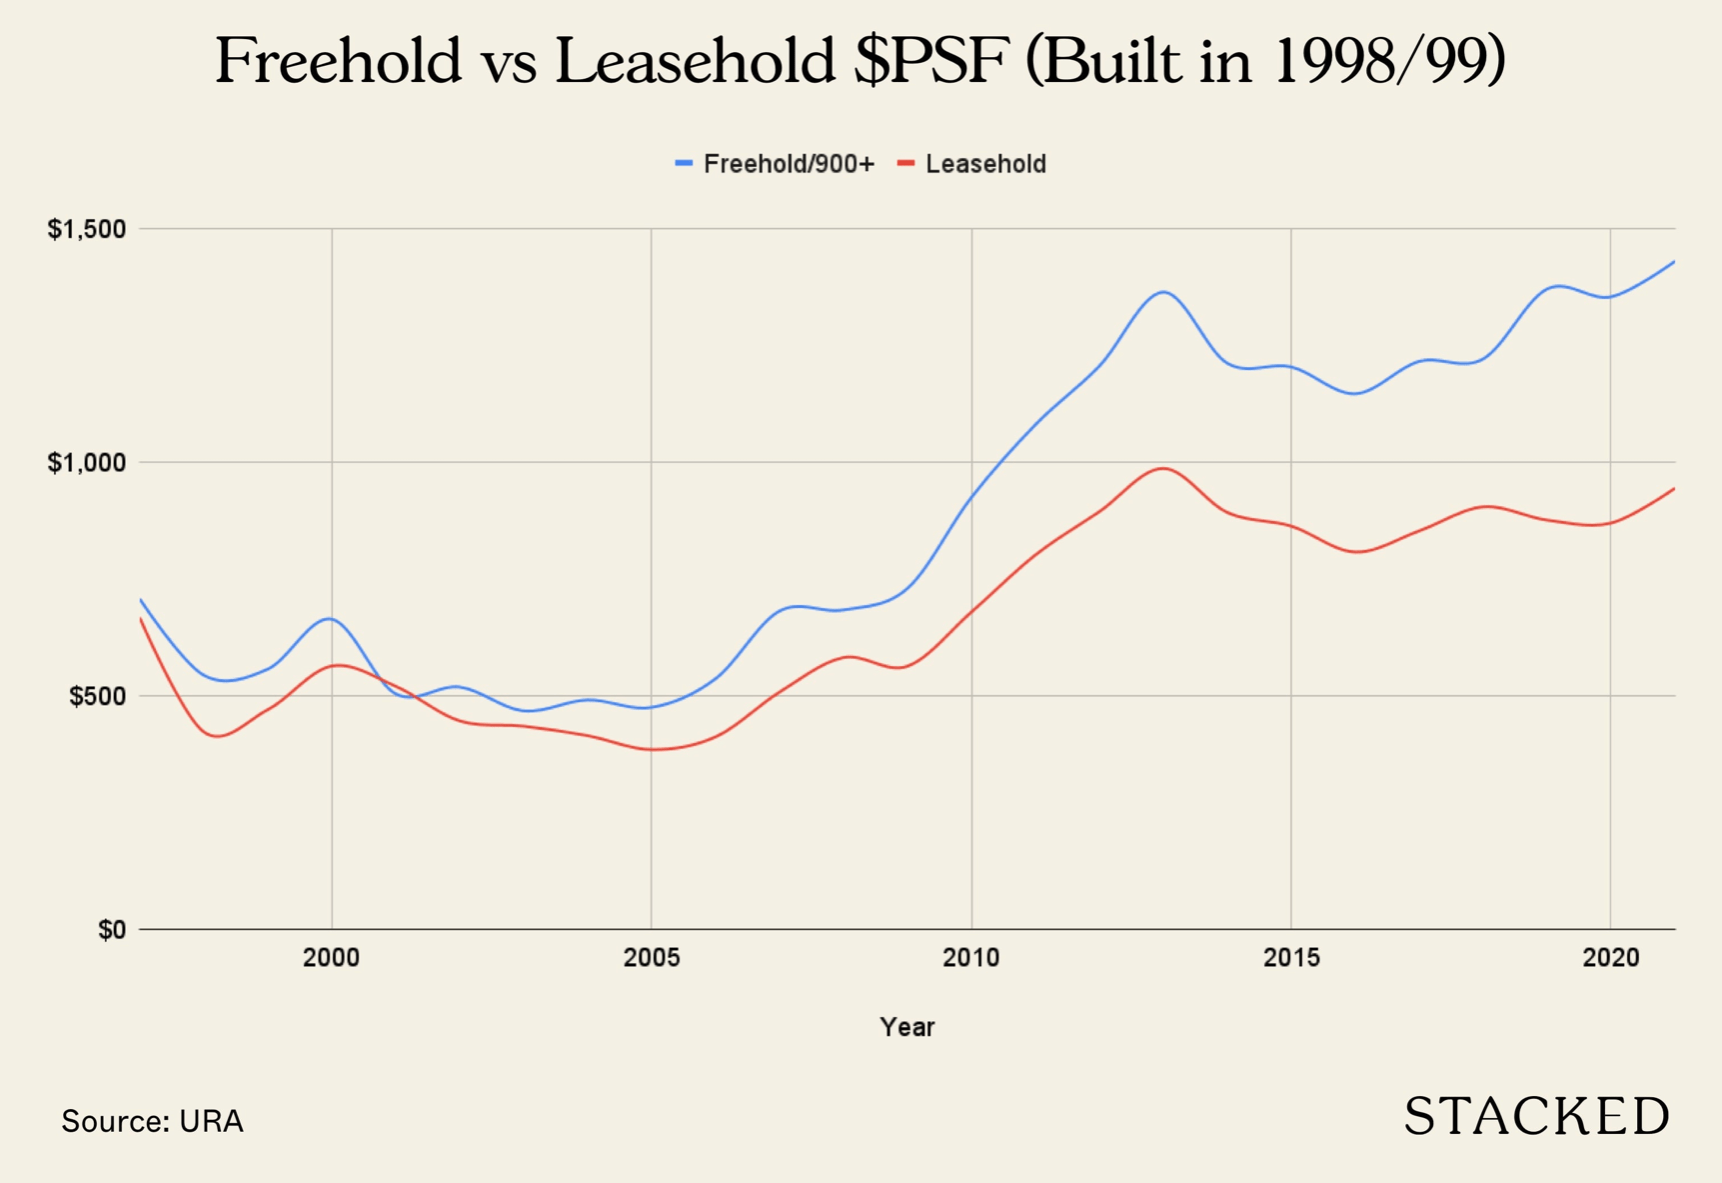 Freehold vs leasehold PSF